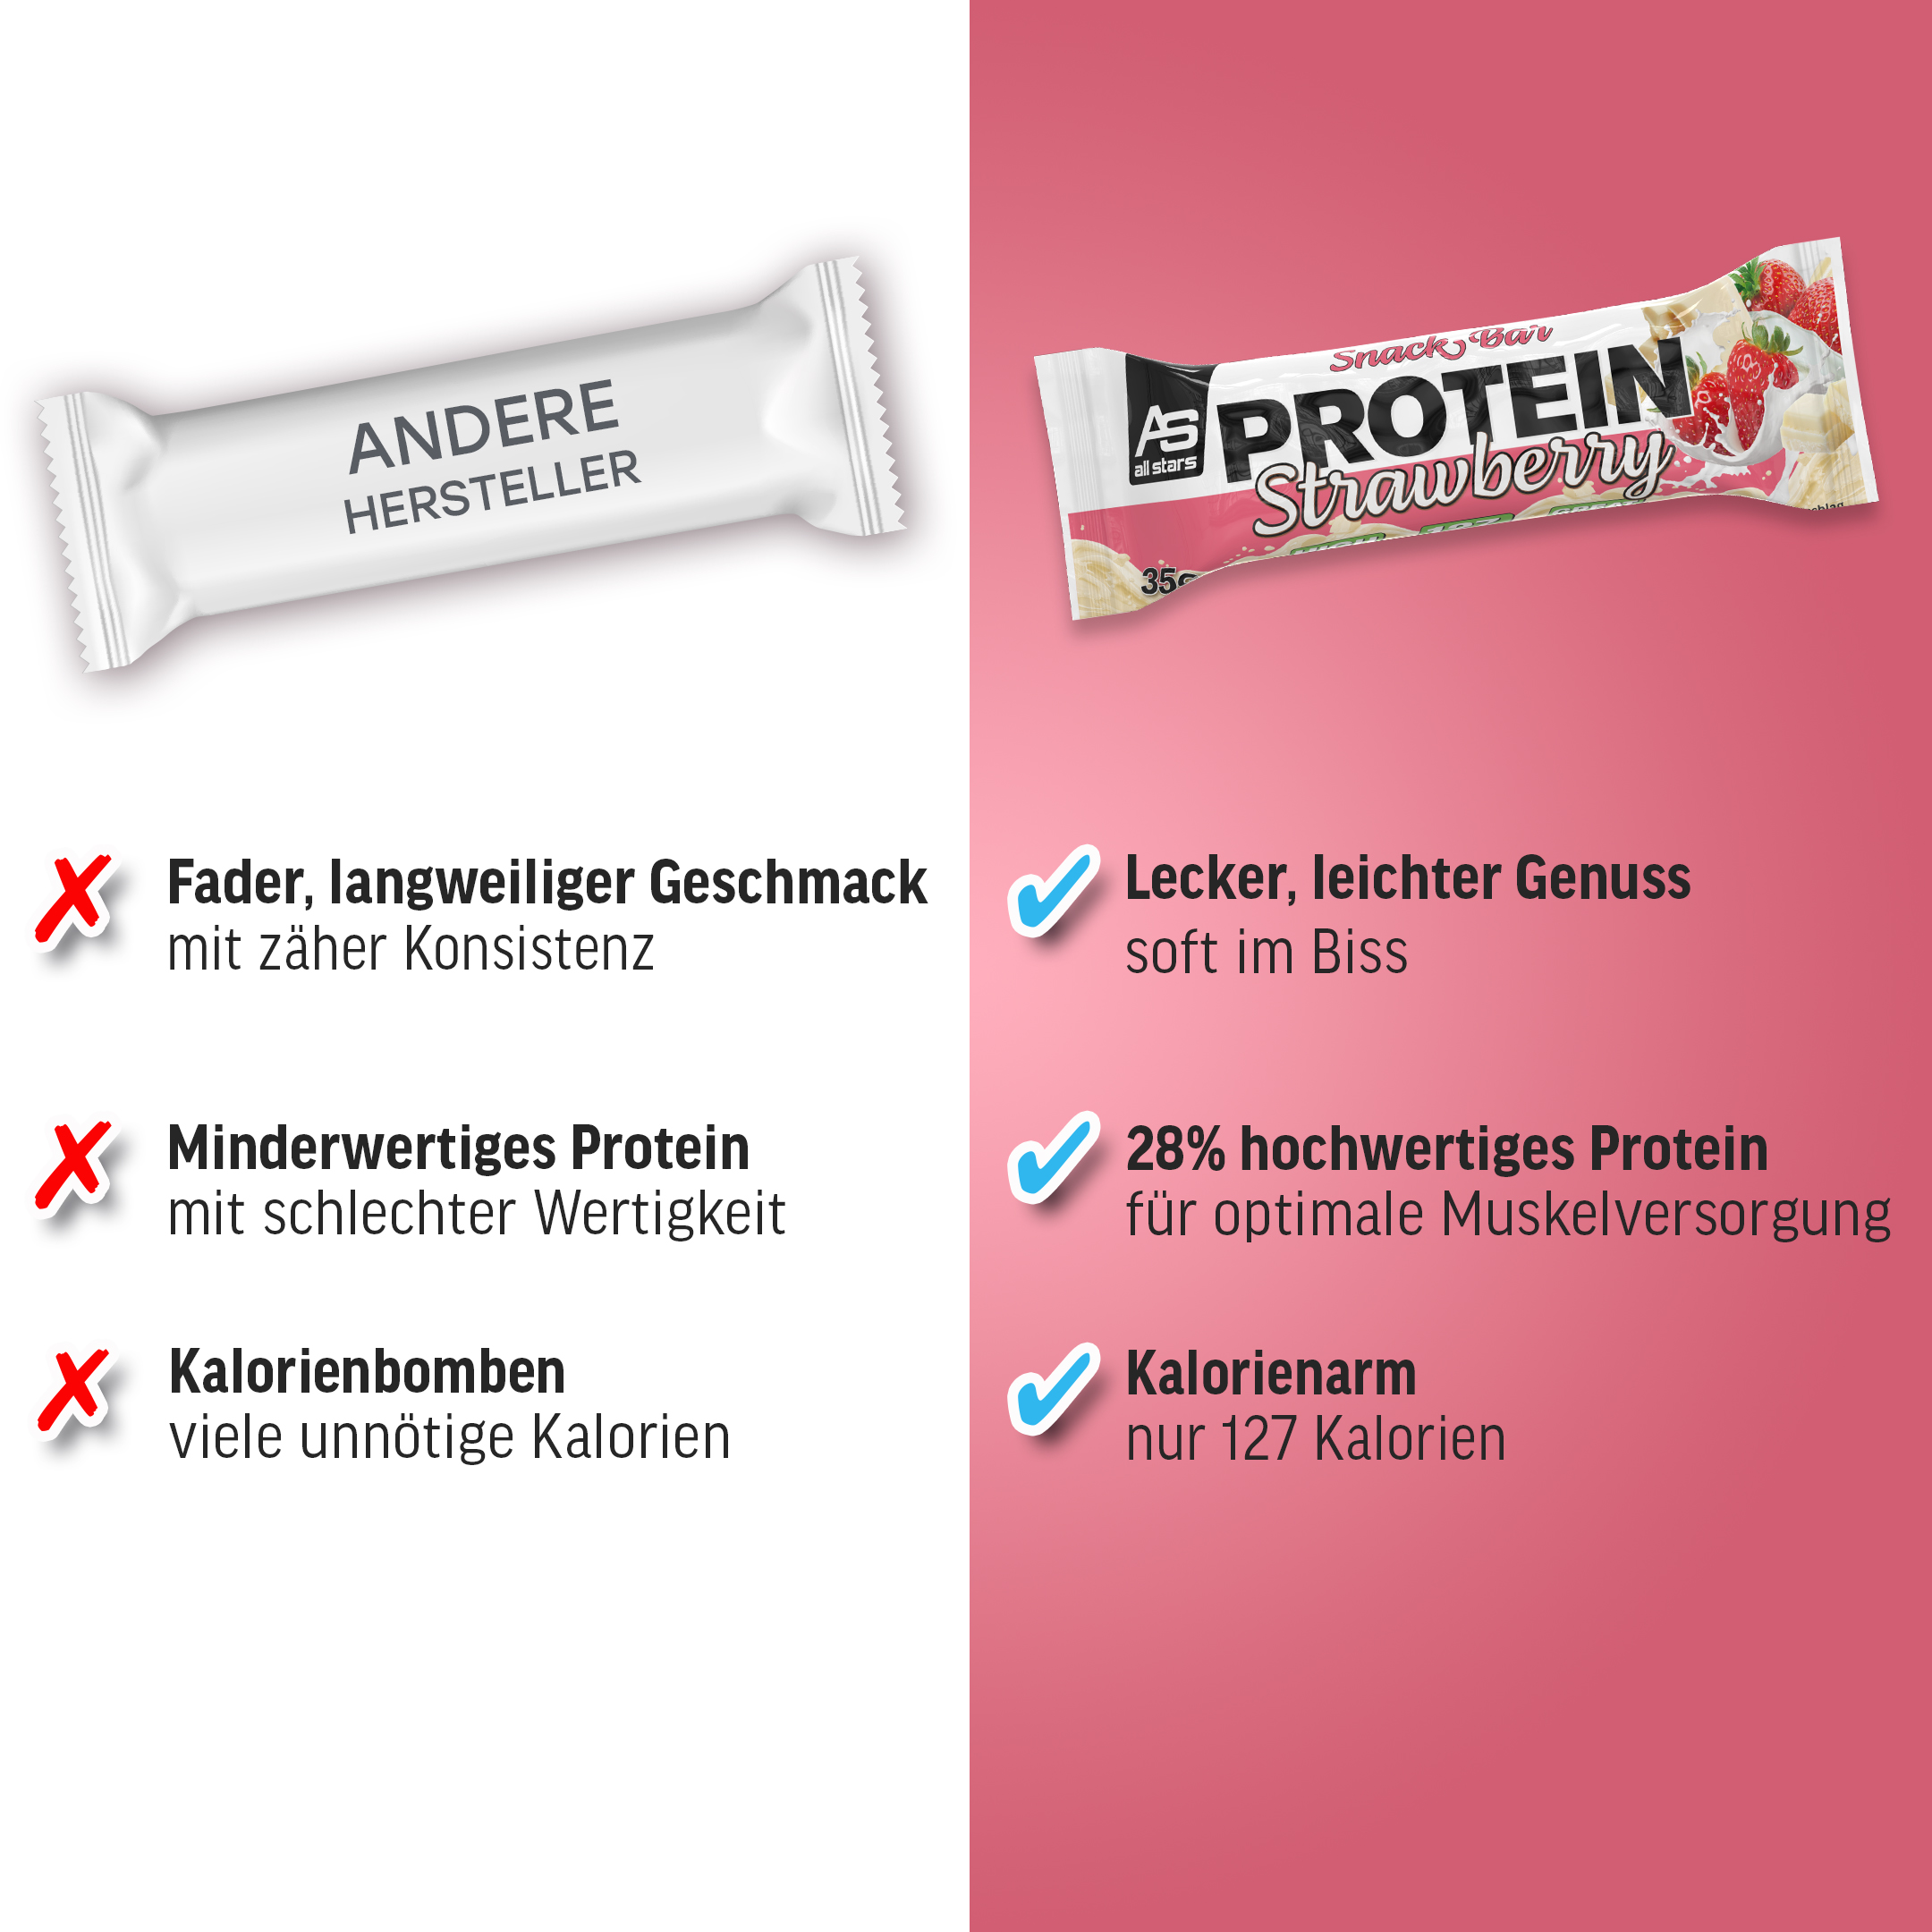 ALL STARS Protein Snack Bar - Proteinriegel